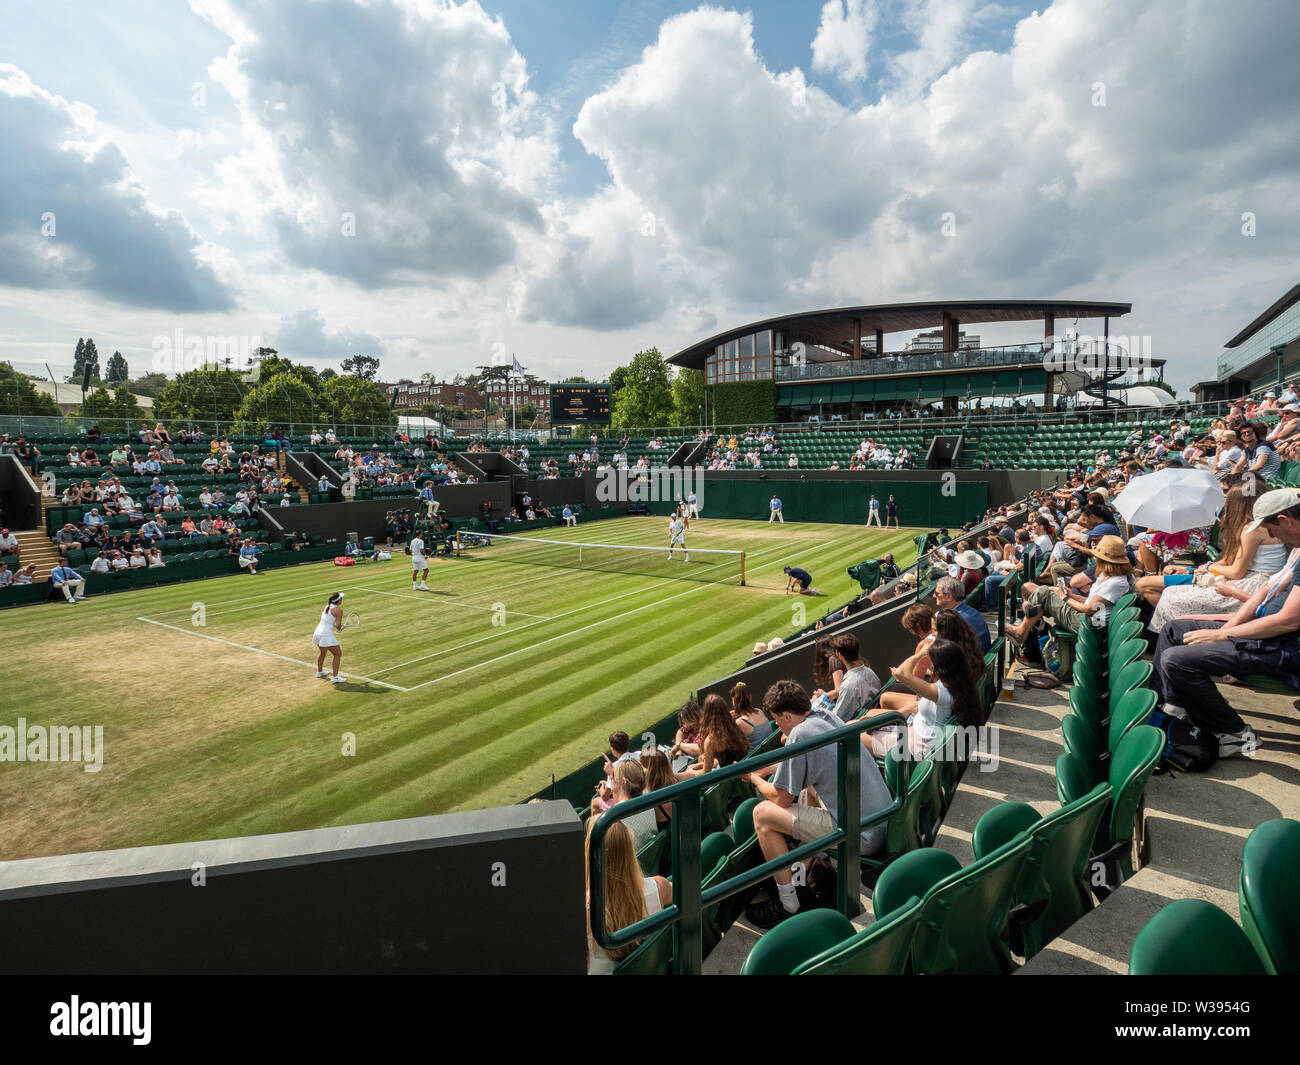 Mixed doubles match at the Wimbledon Tennis Tournament, London, England Stock Photo